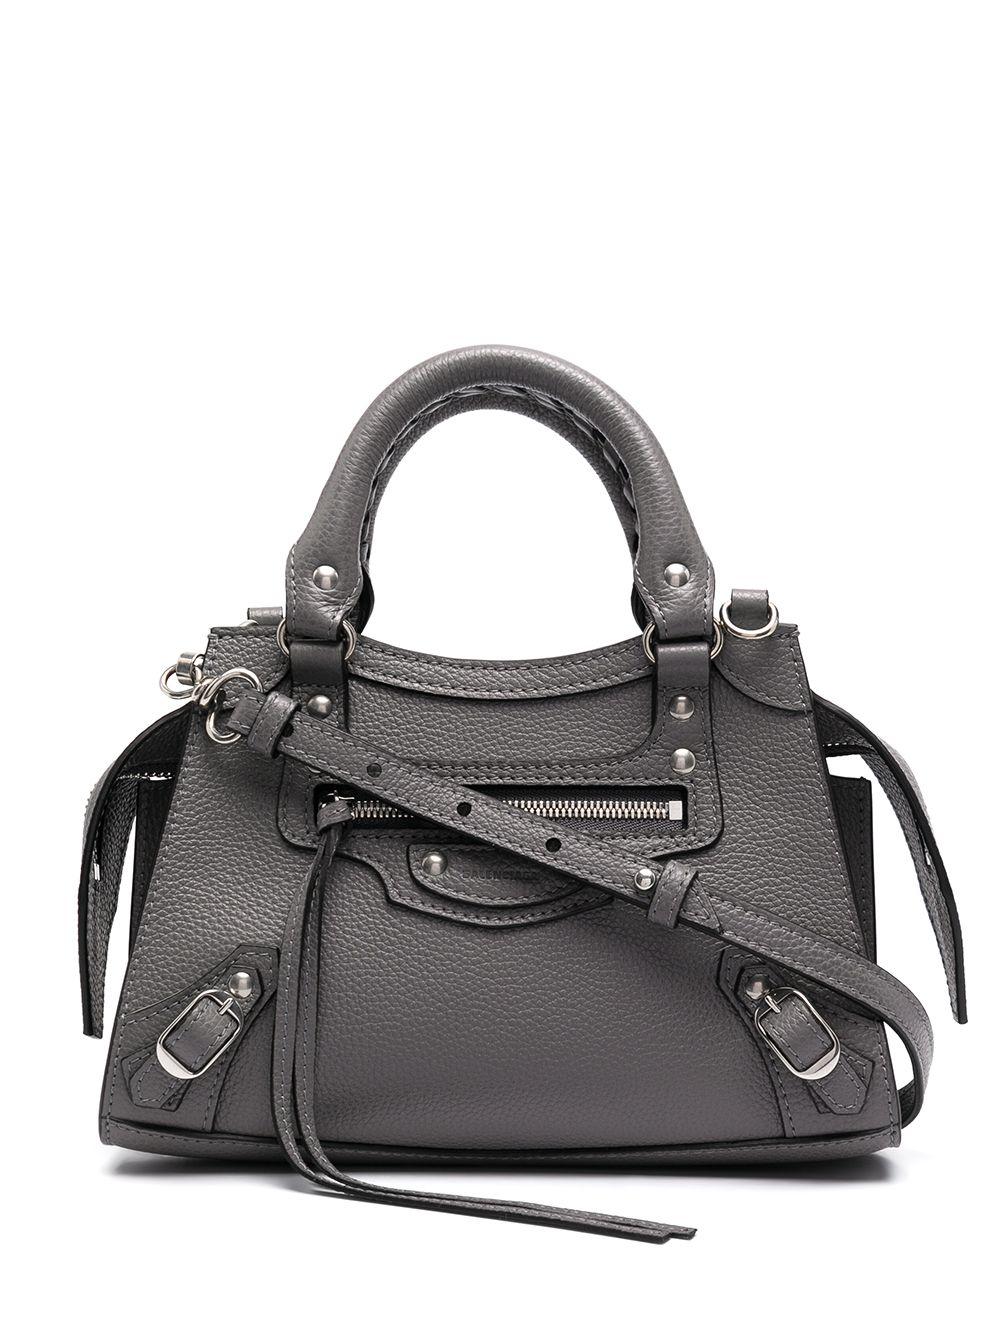 Balenciaga Leather Mini Neo Classic City Tote Bag in Grey (Gray) - Save 6%  - Lyst